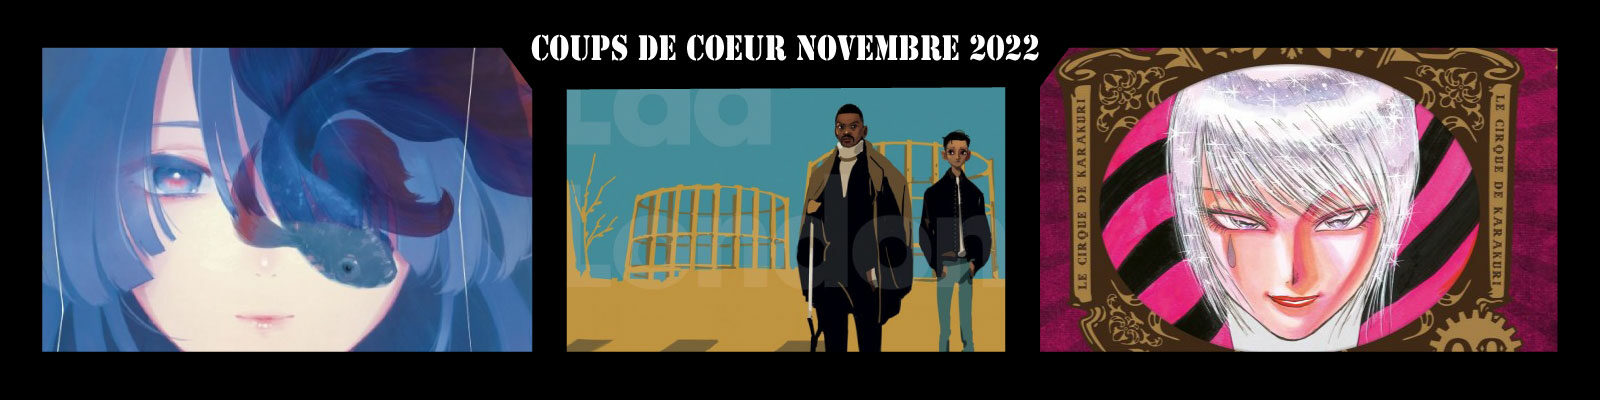 Coups-de-coeur-novembre 2022-2